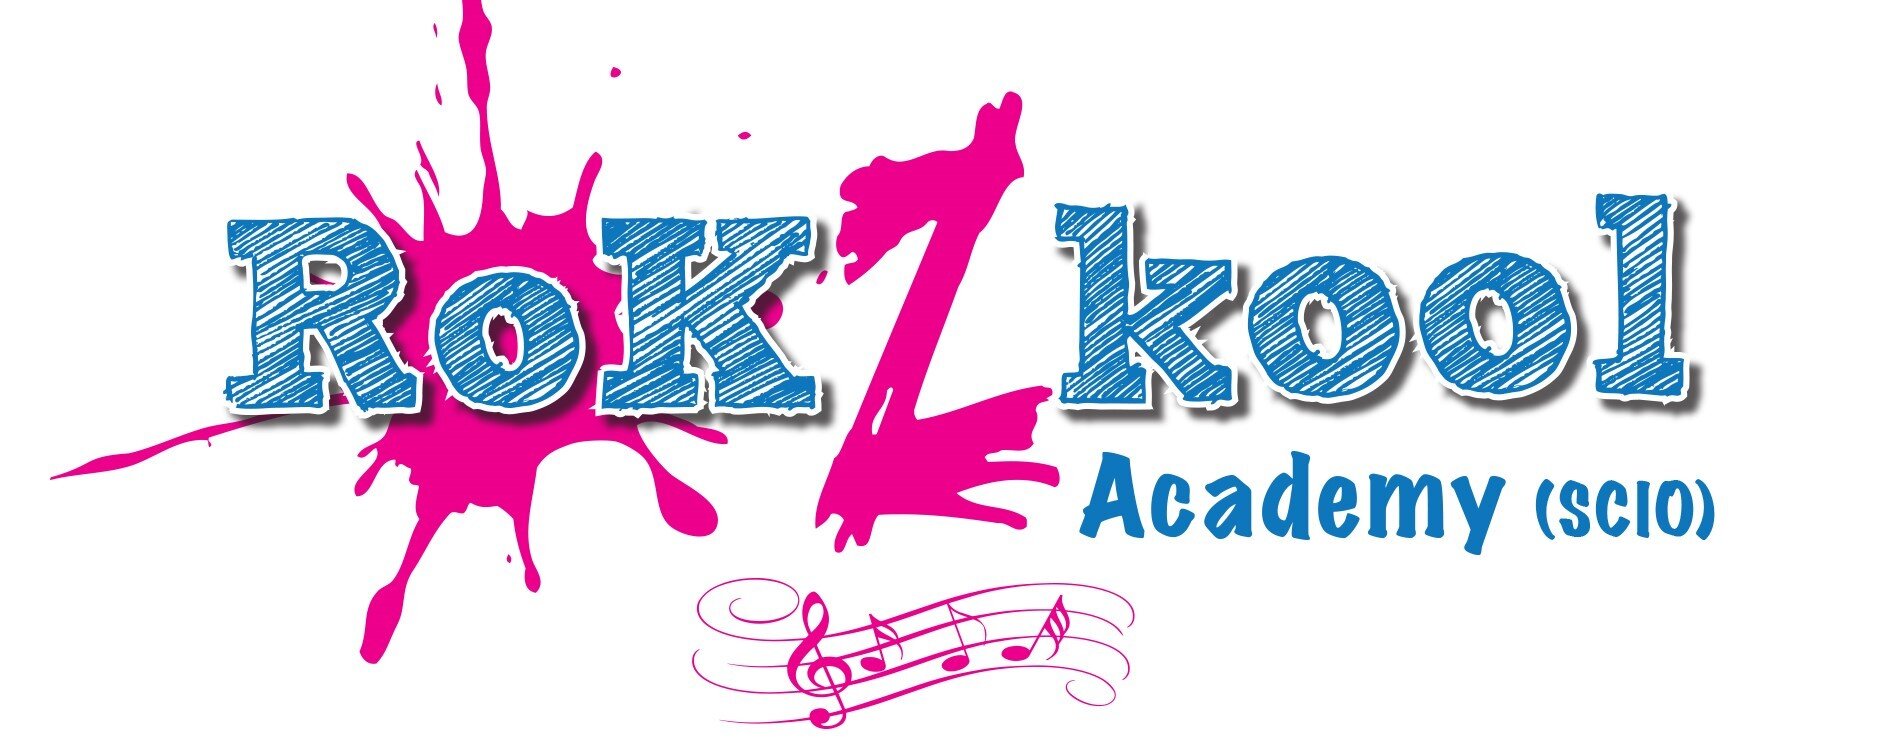 RoKzKool4u logo Academy SCIO-01 (1) Cropped.jpg